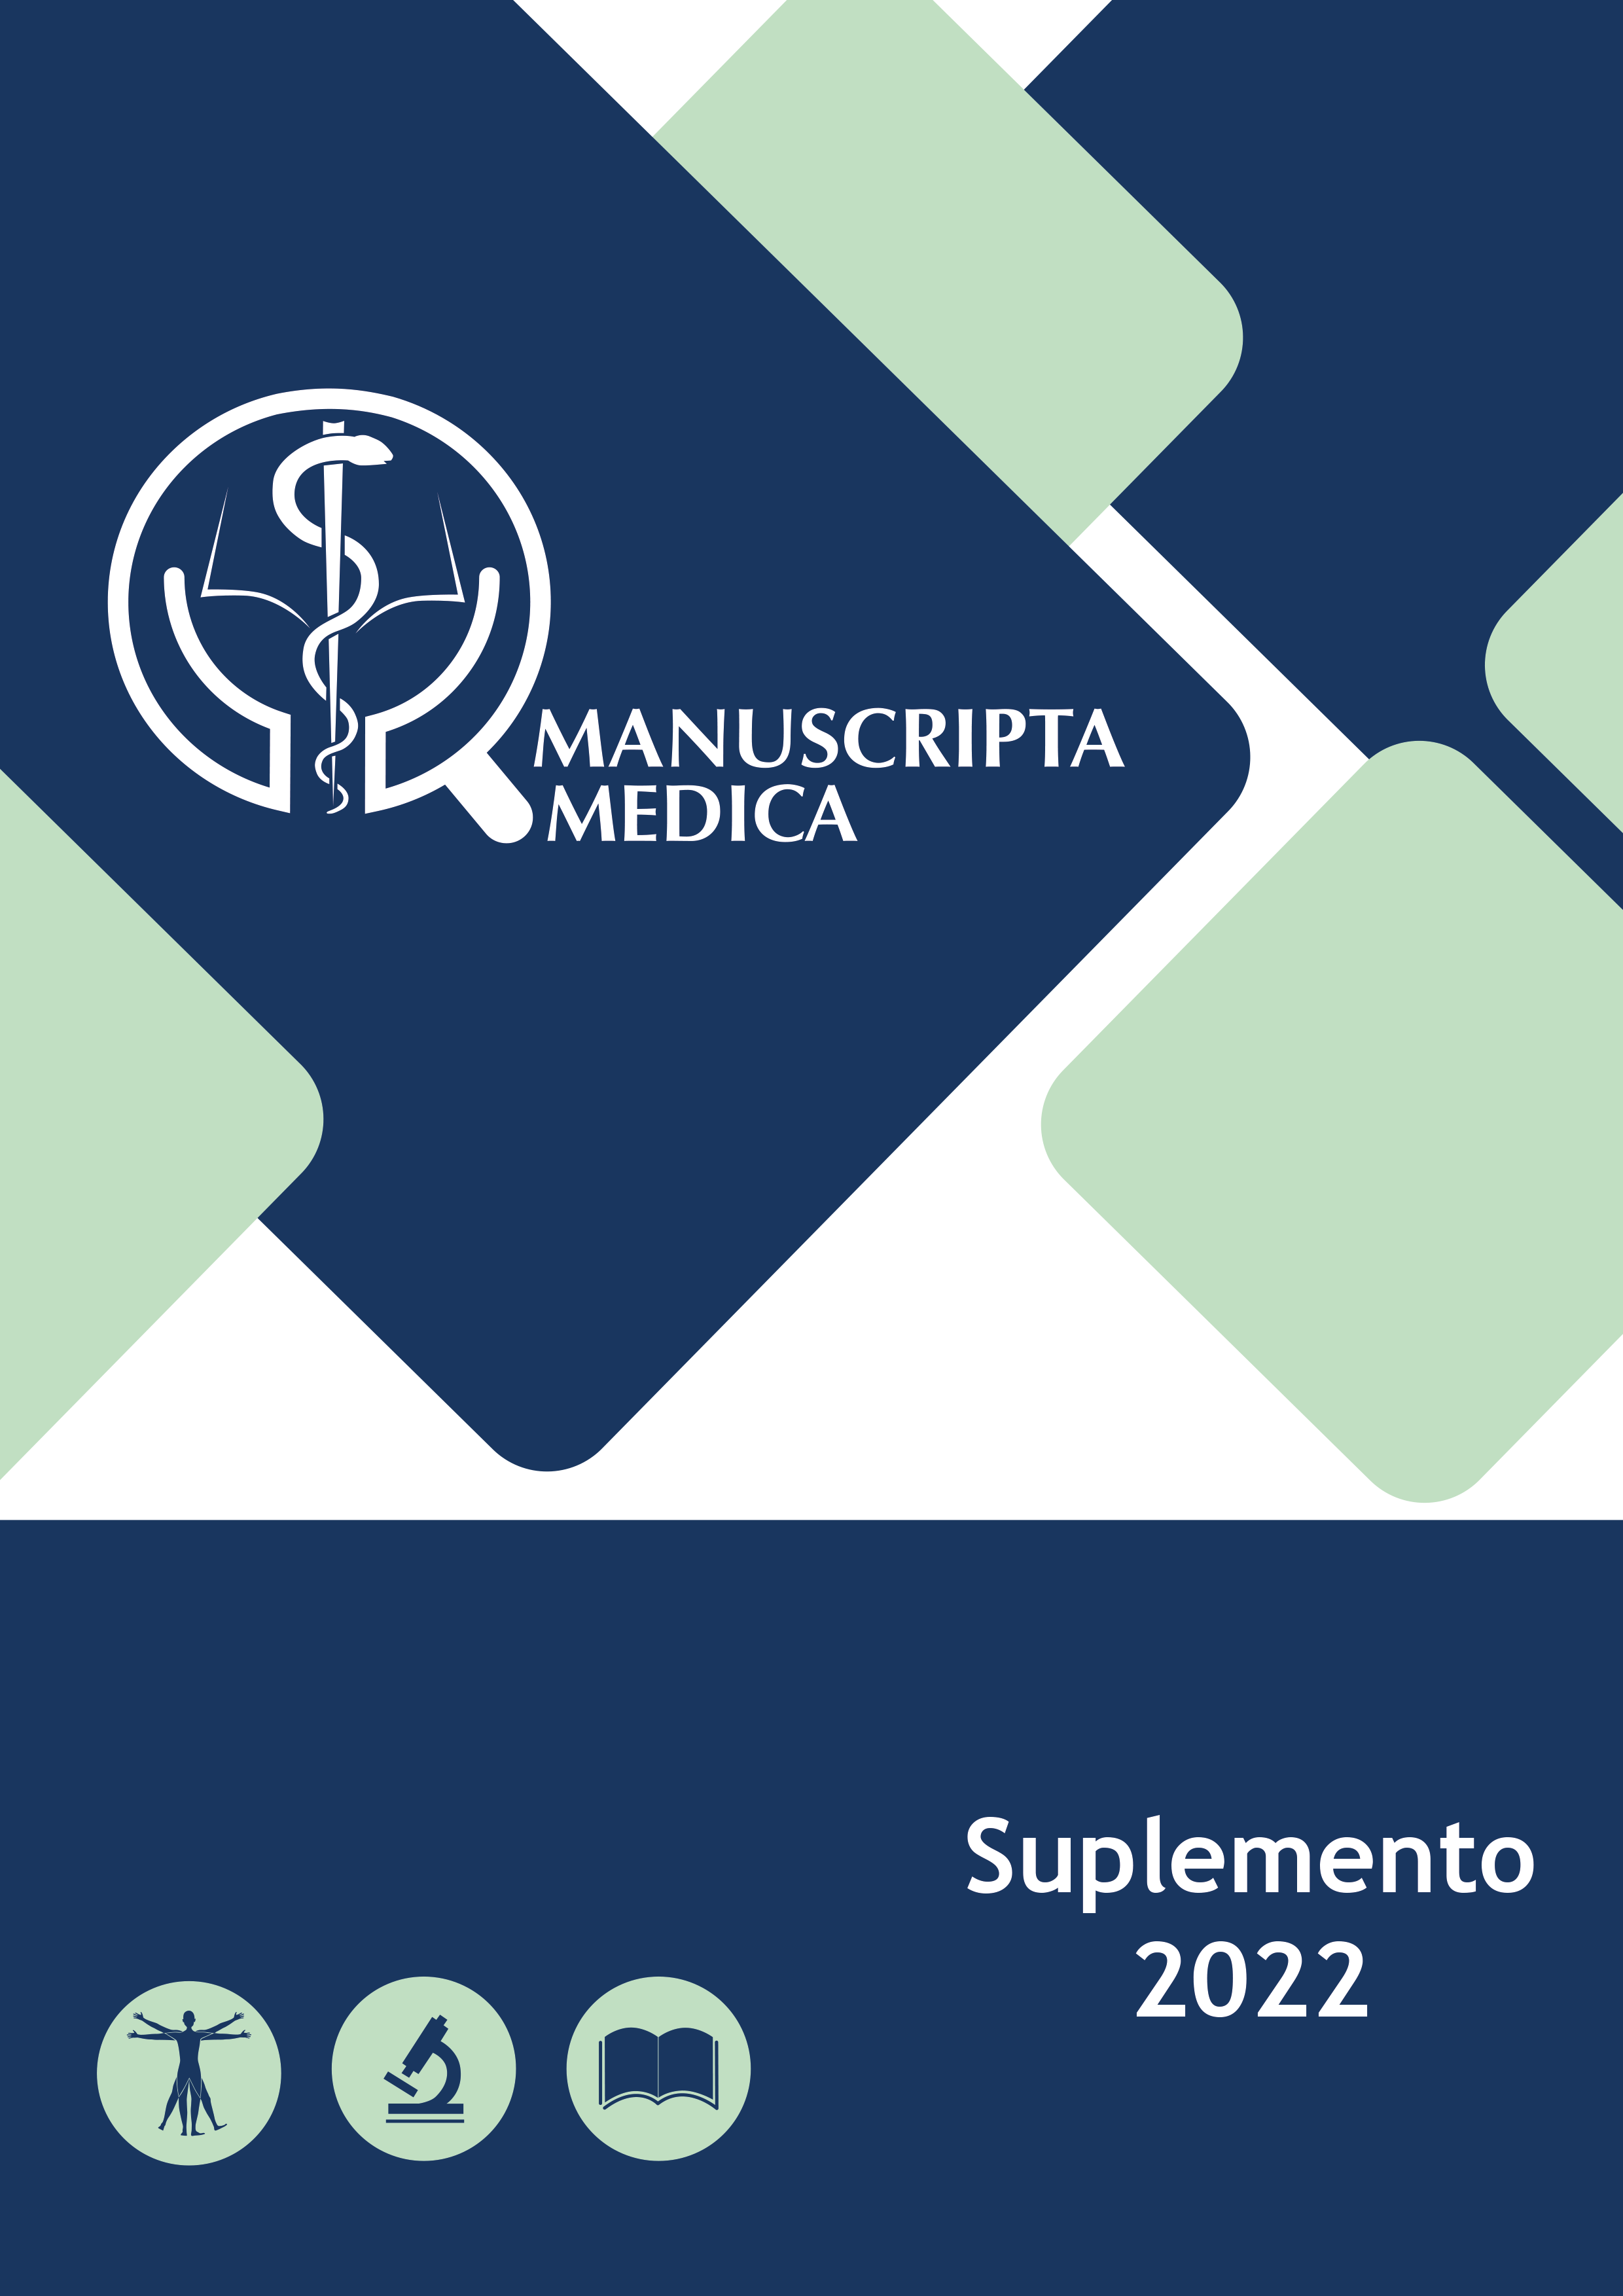 					View 2022: Suplemento Manuscripta Medica
				